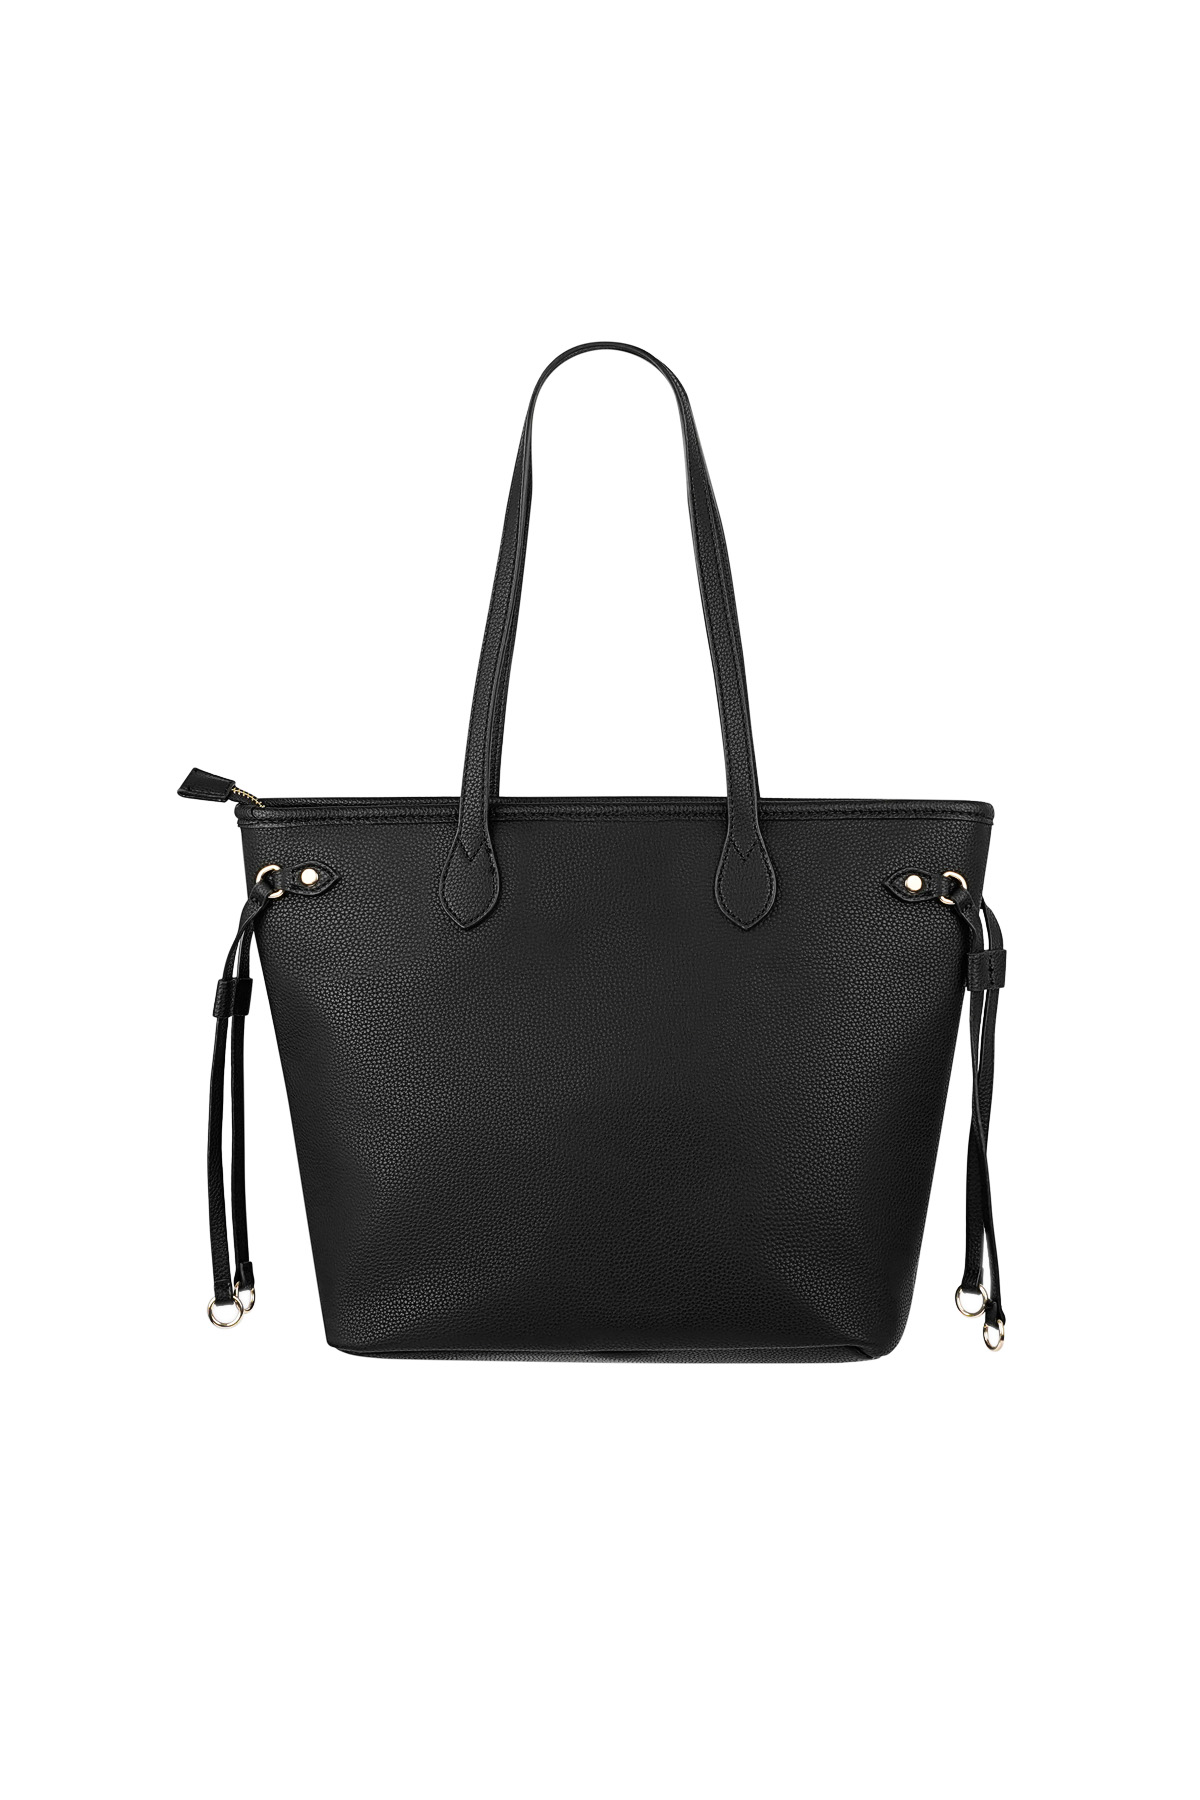 Handbag with straps - black